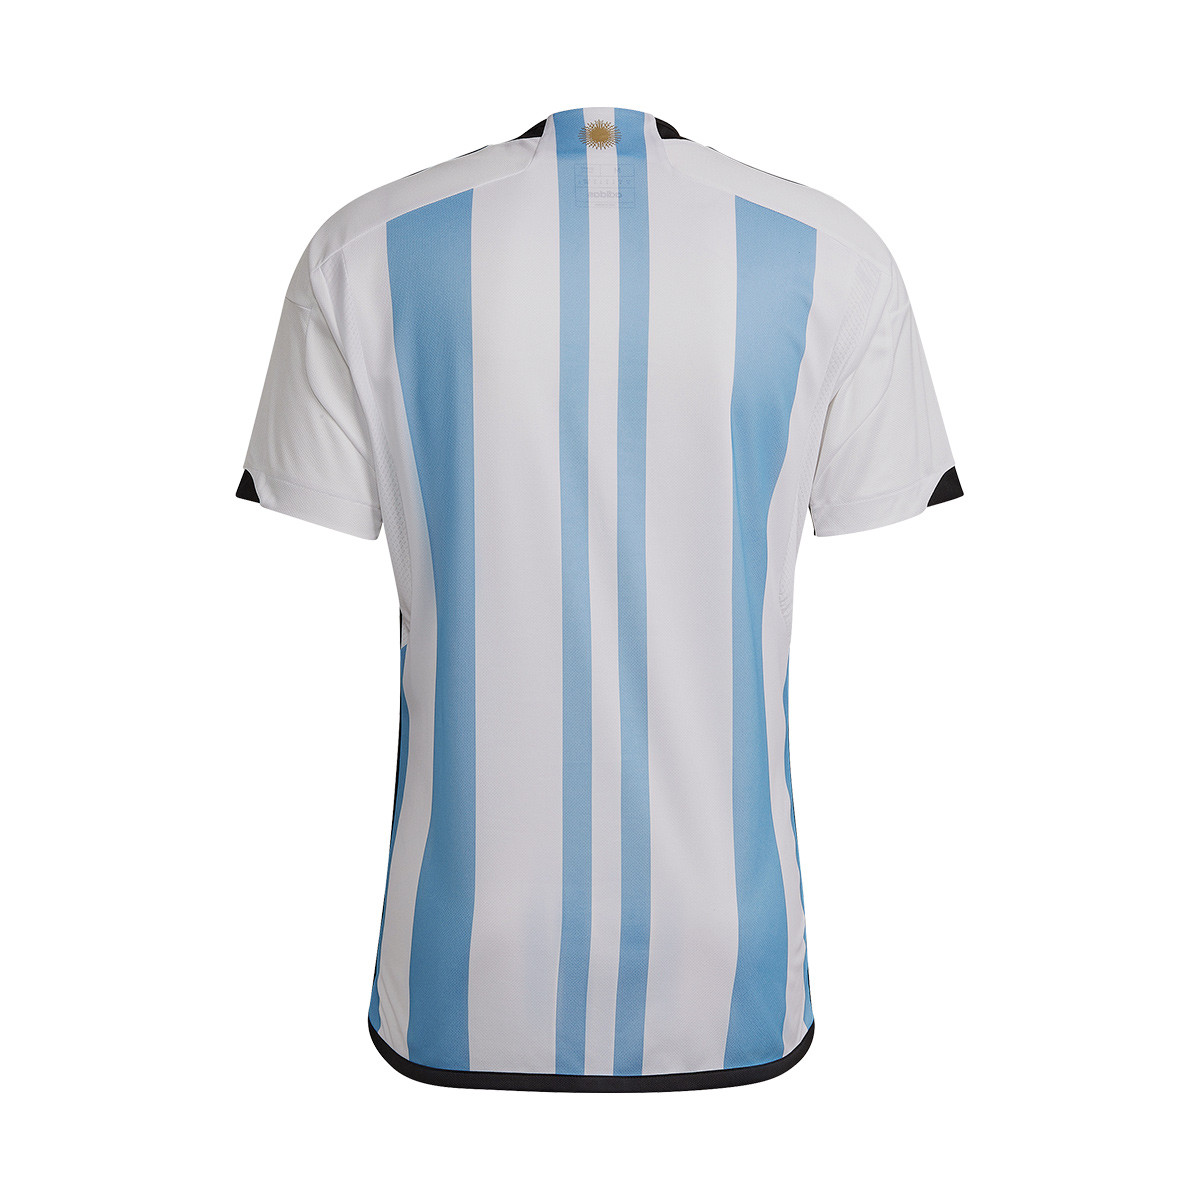 adidas Argentina Gym Sack World Cup 2022 - White/Blue - Soccer